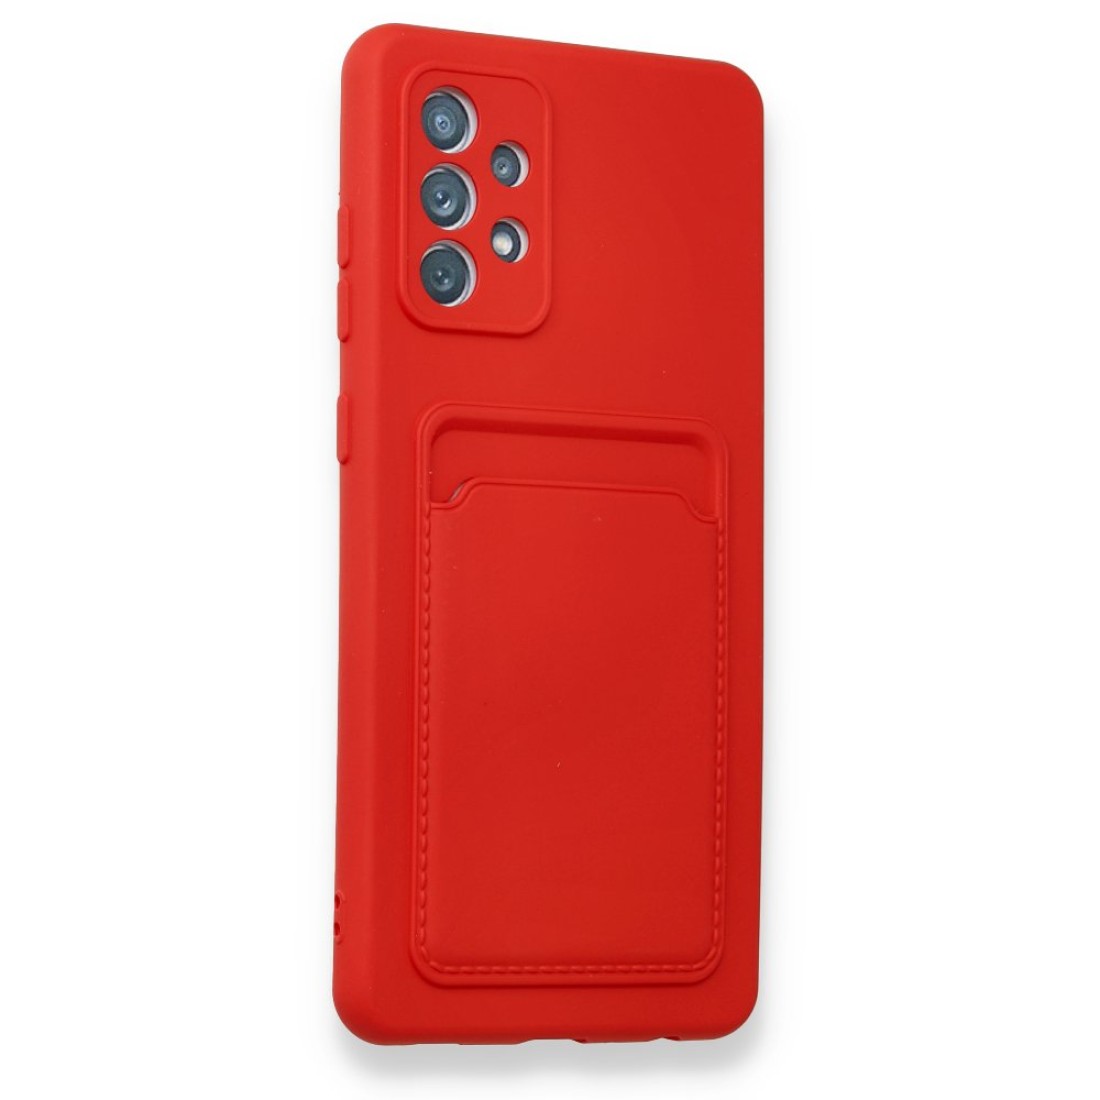 Samsung Galaxy A72 Kılıf Kelvin Kartvizitli Silikon - Kırmızı